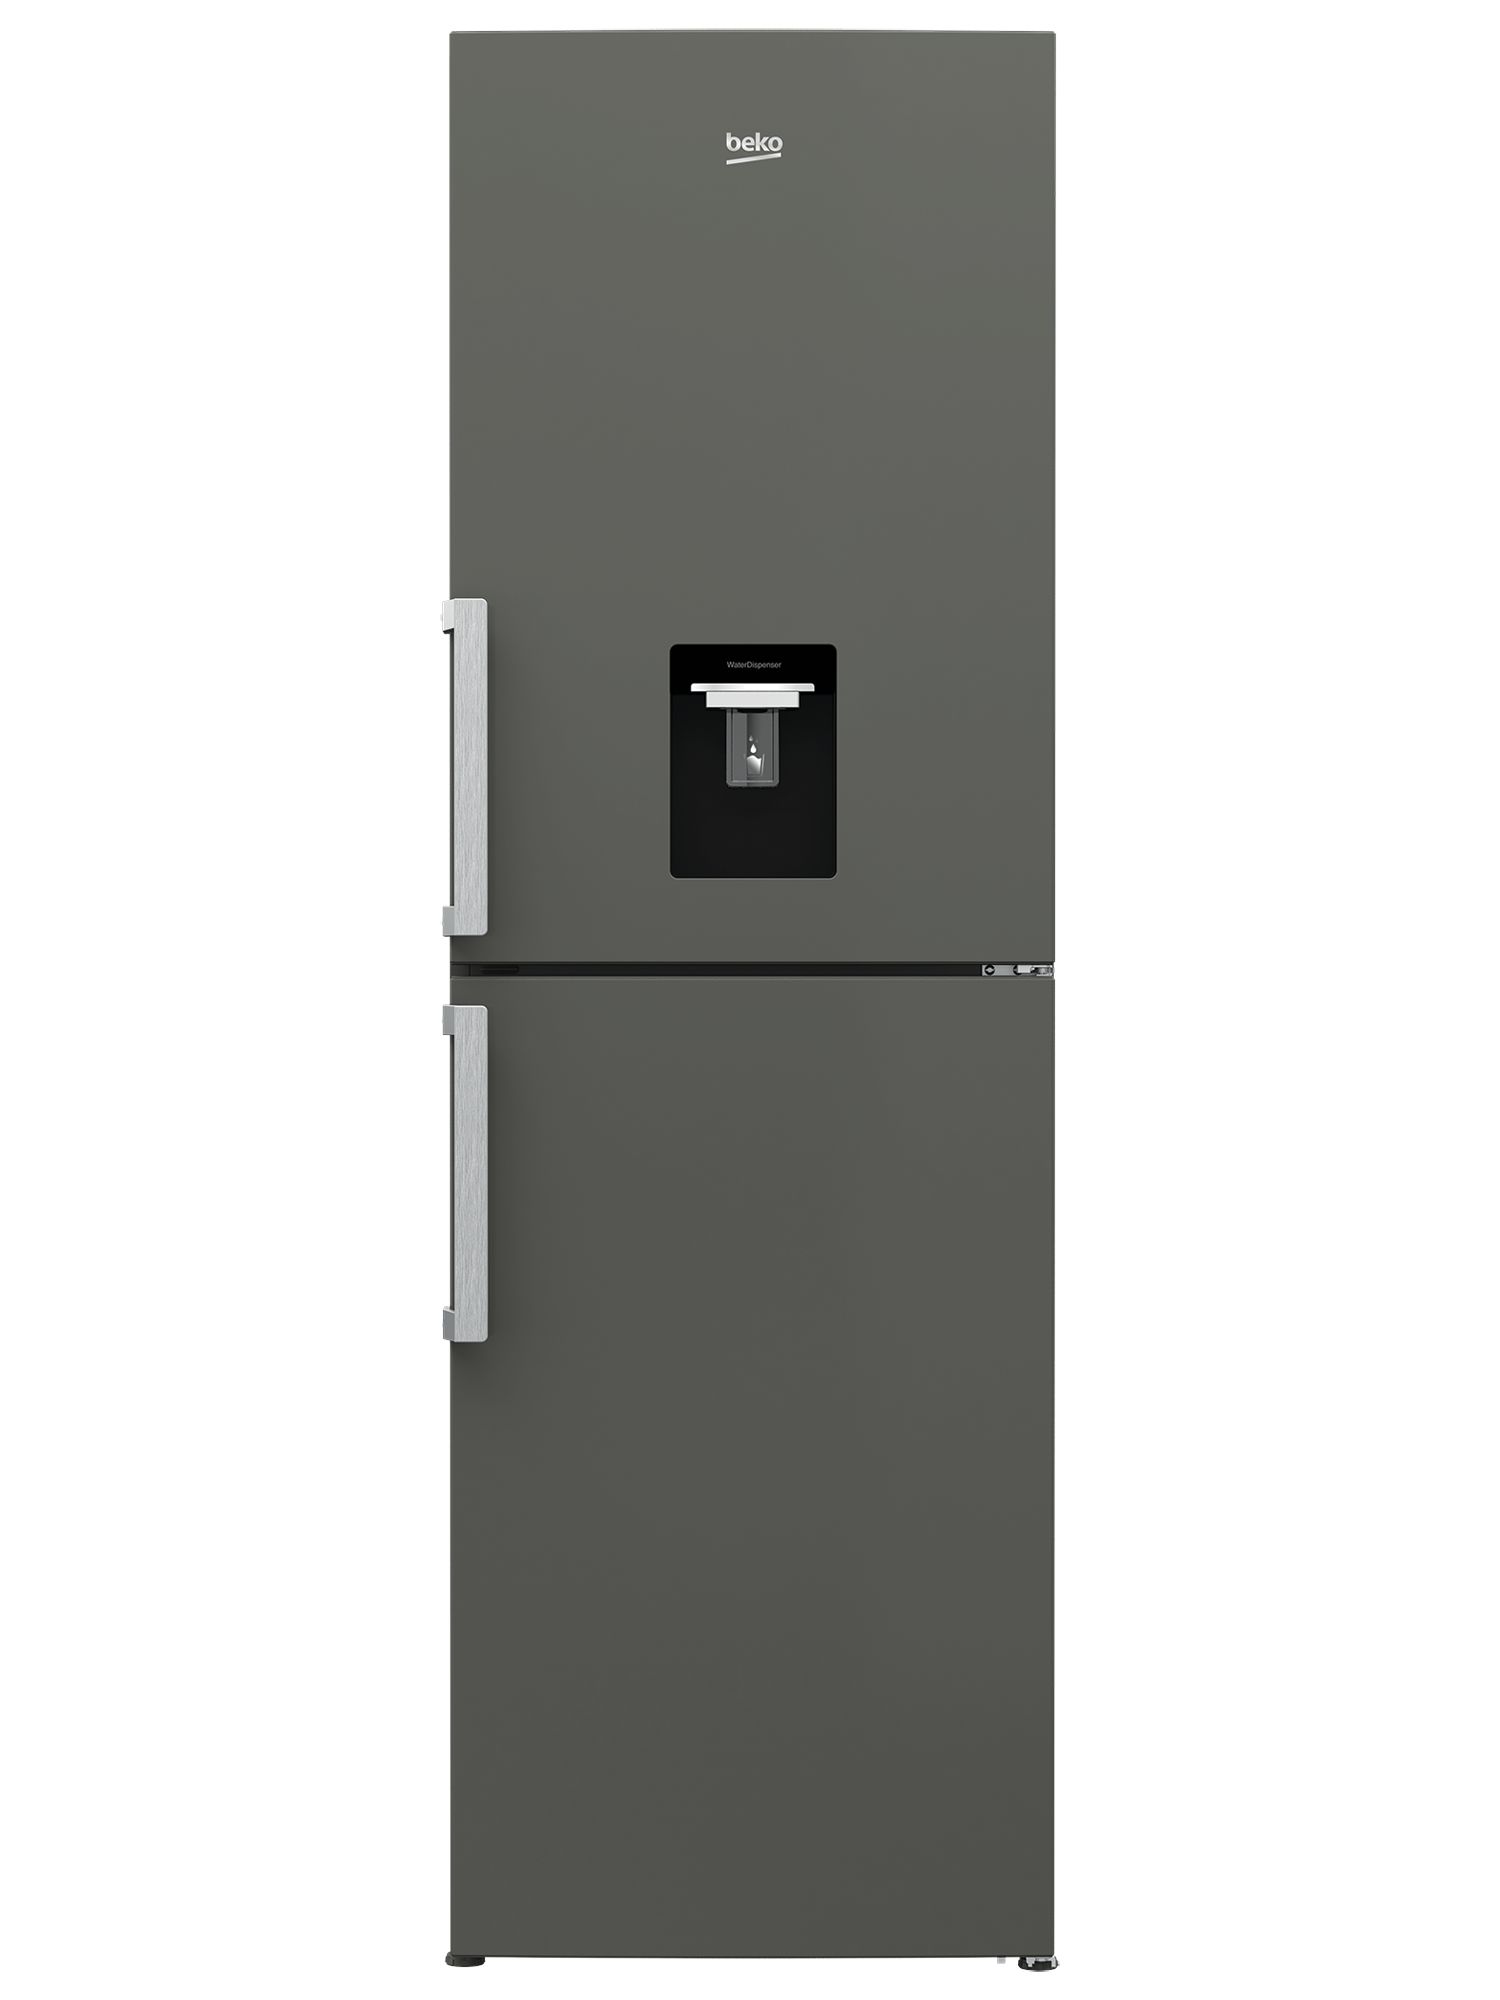 Beko CFP1691DG Freestanding Fridge Freezer, A+ Energy Rating, 60cm Wide, Graphite